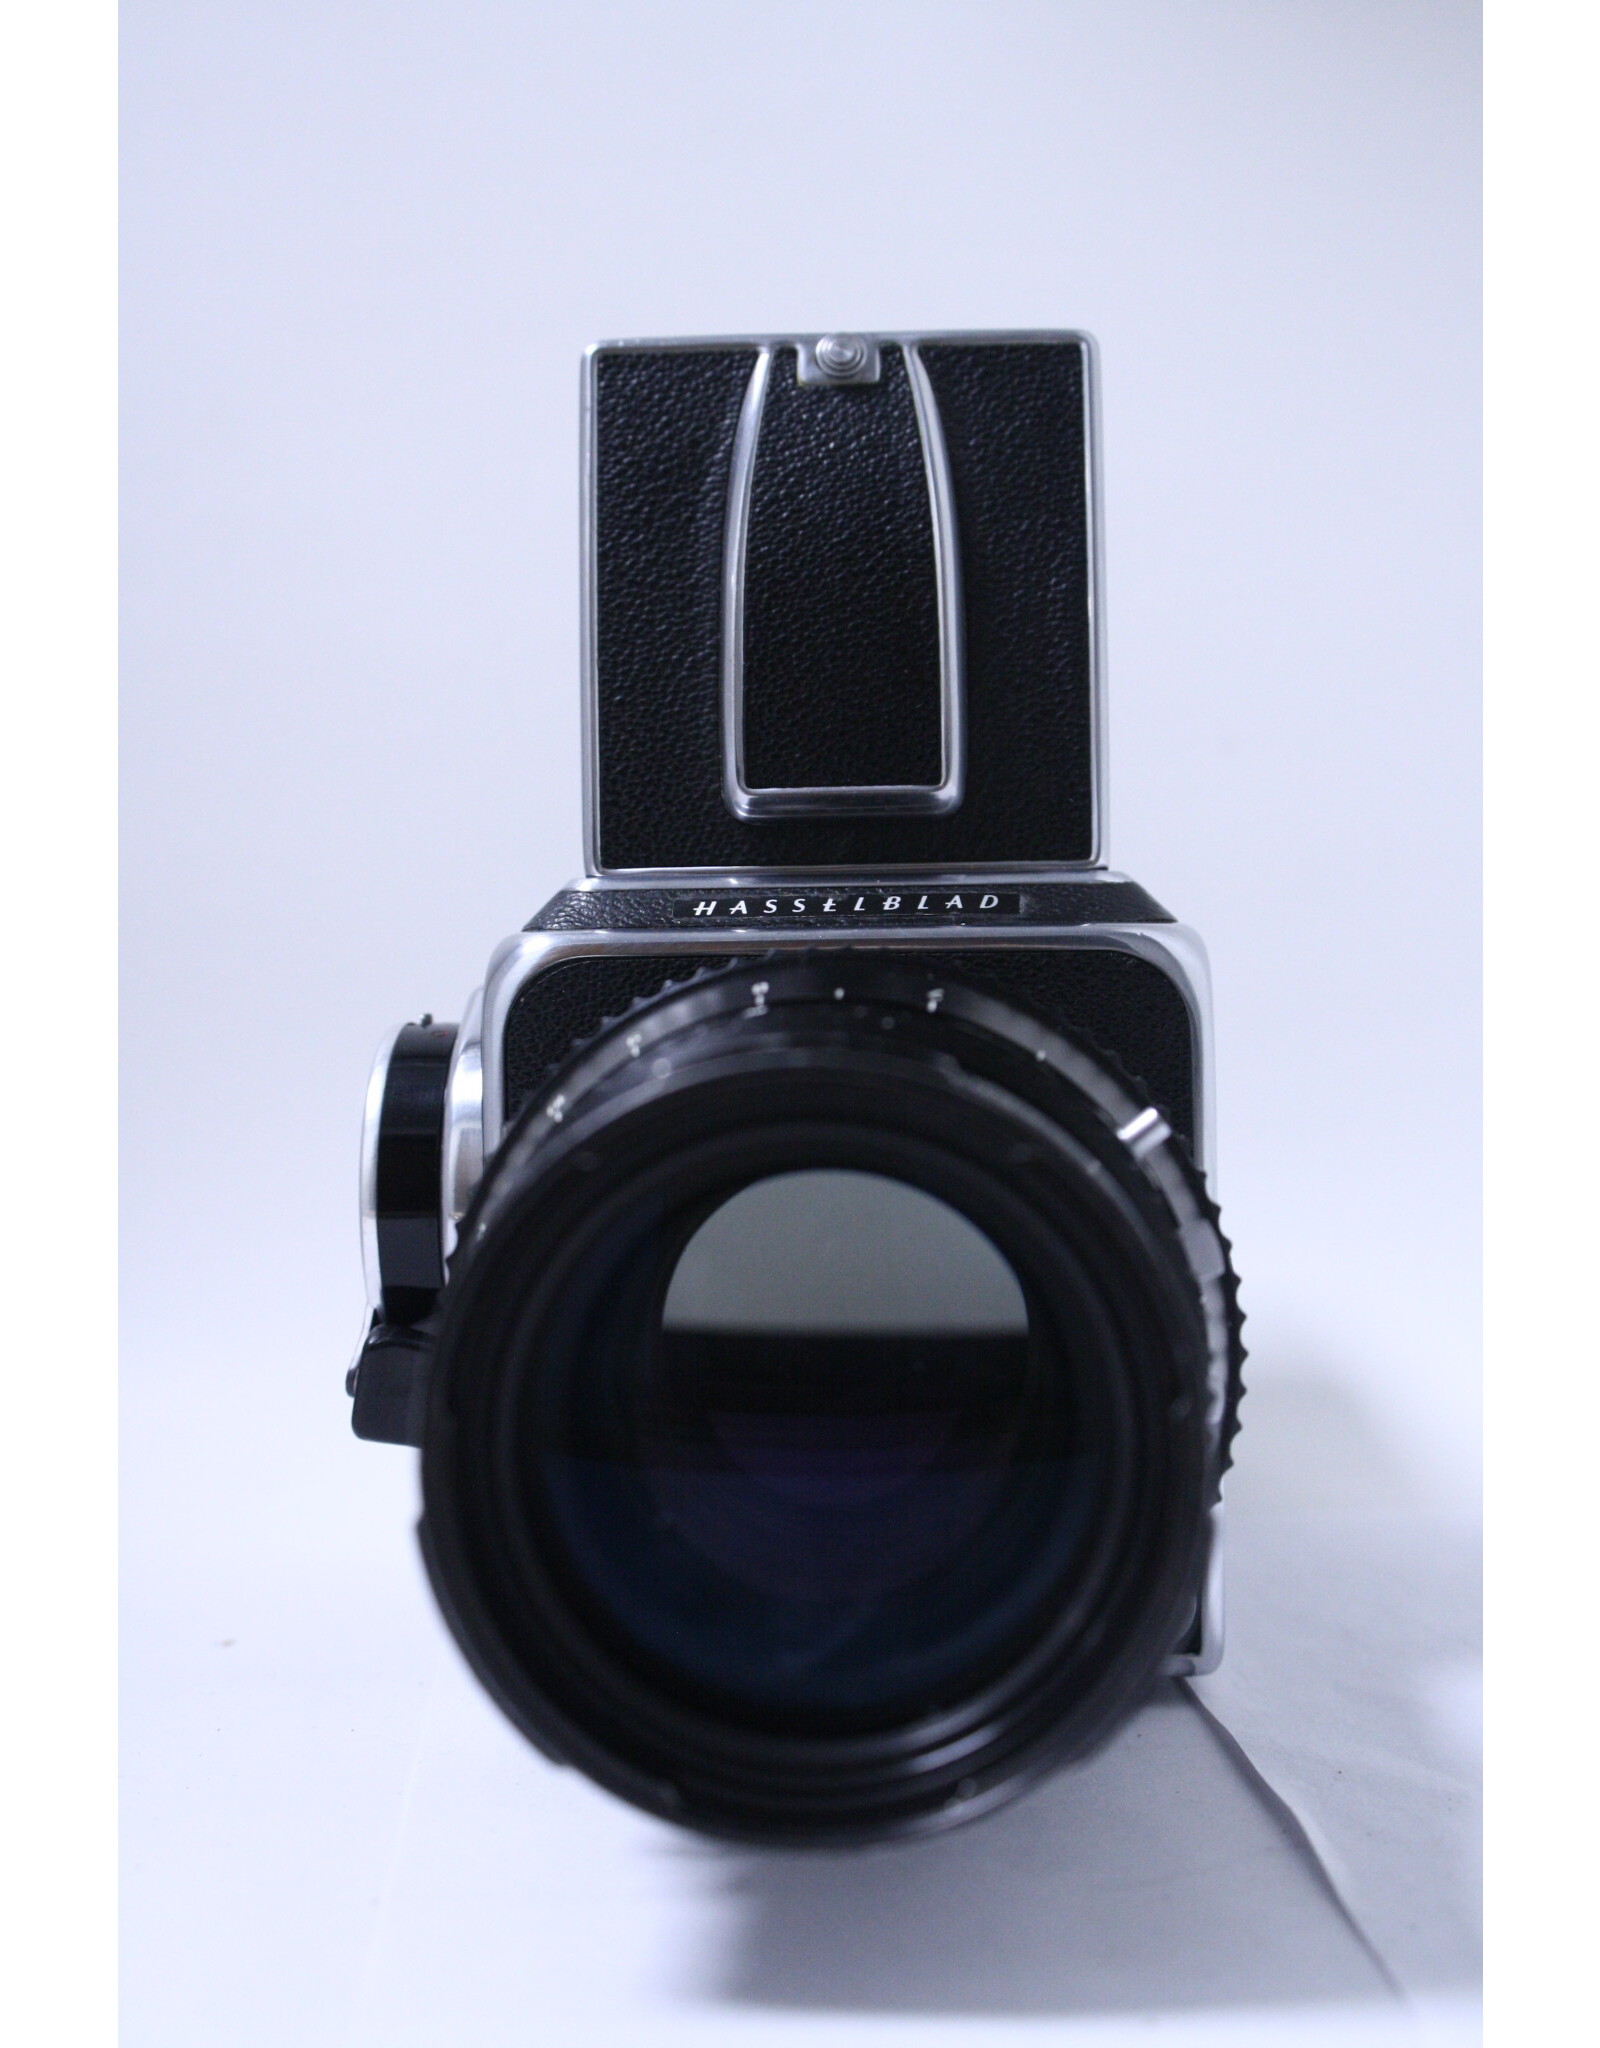 Hasselblad 500C Medium Format Film Camera Body with Carl Zeiss T 